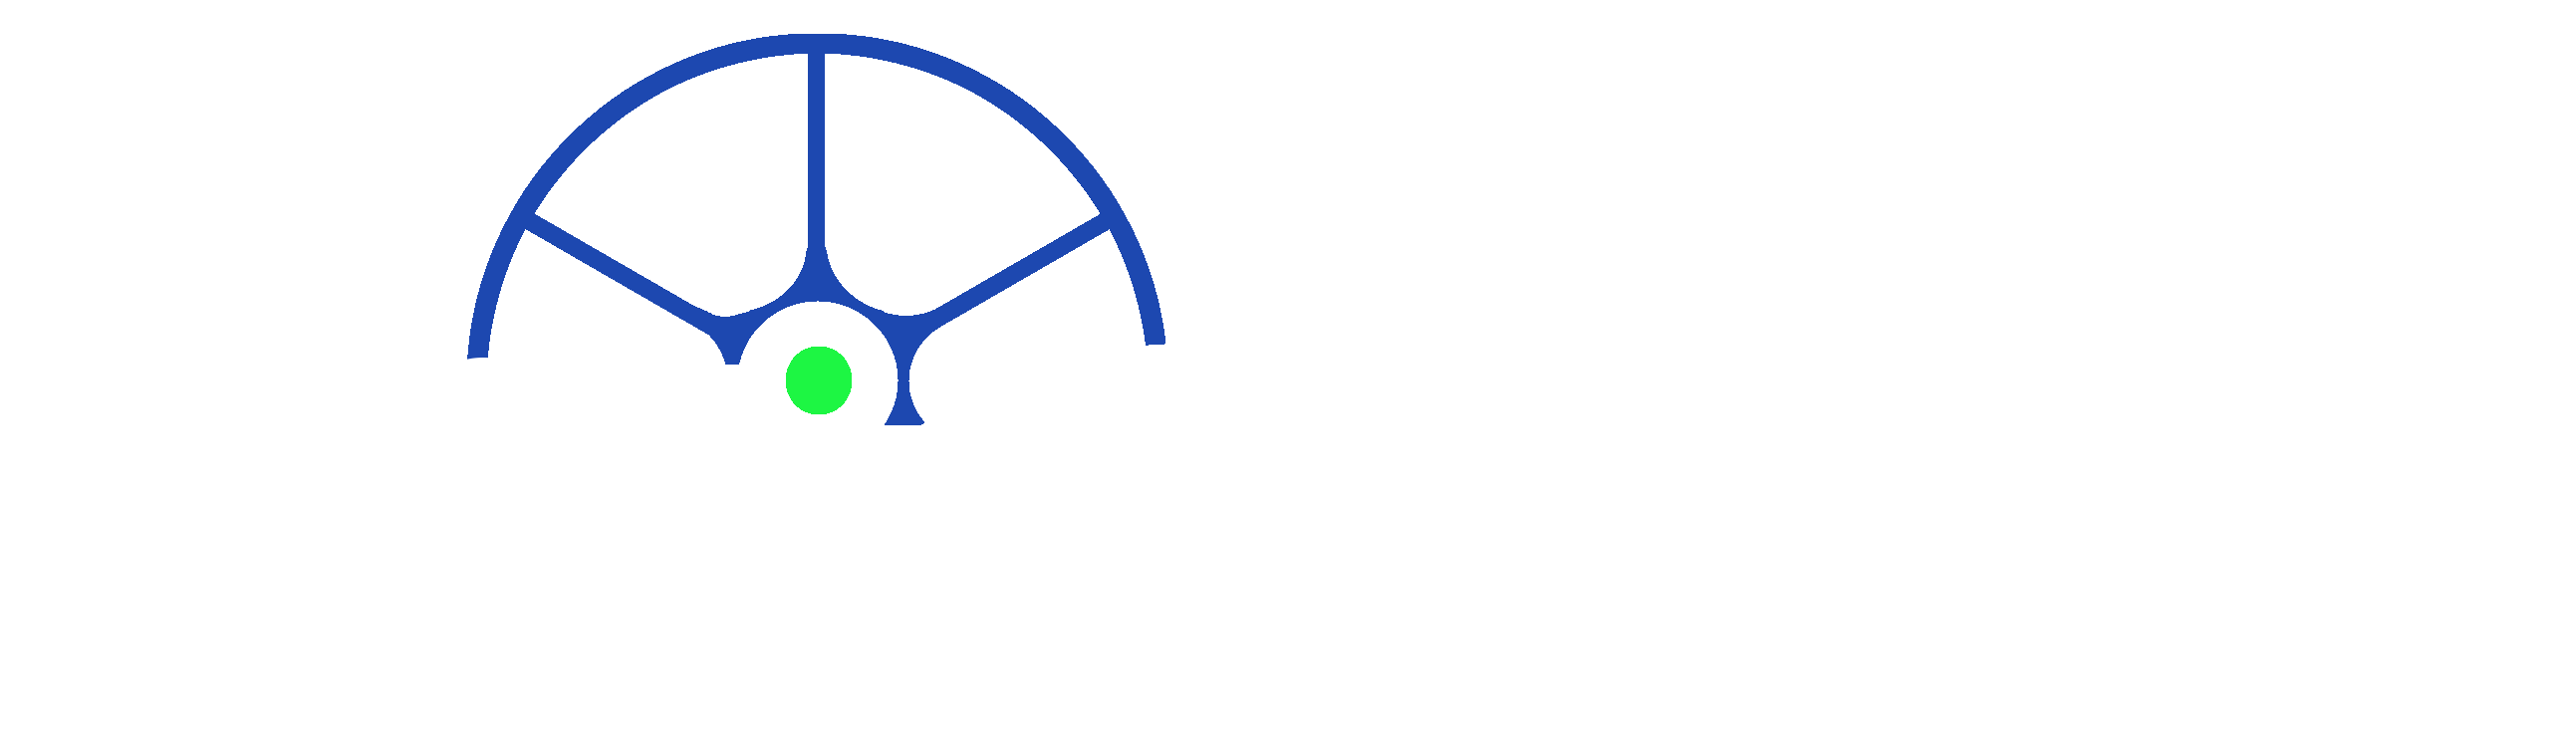 SM Windings Logo